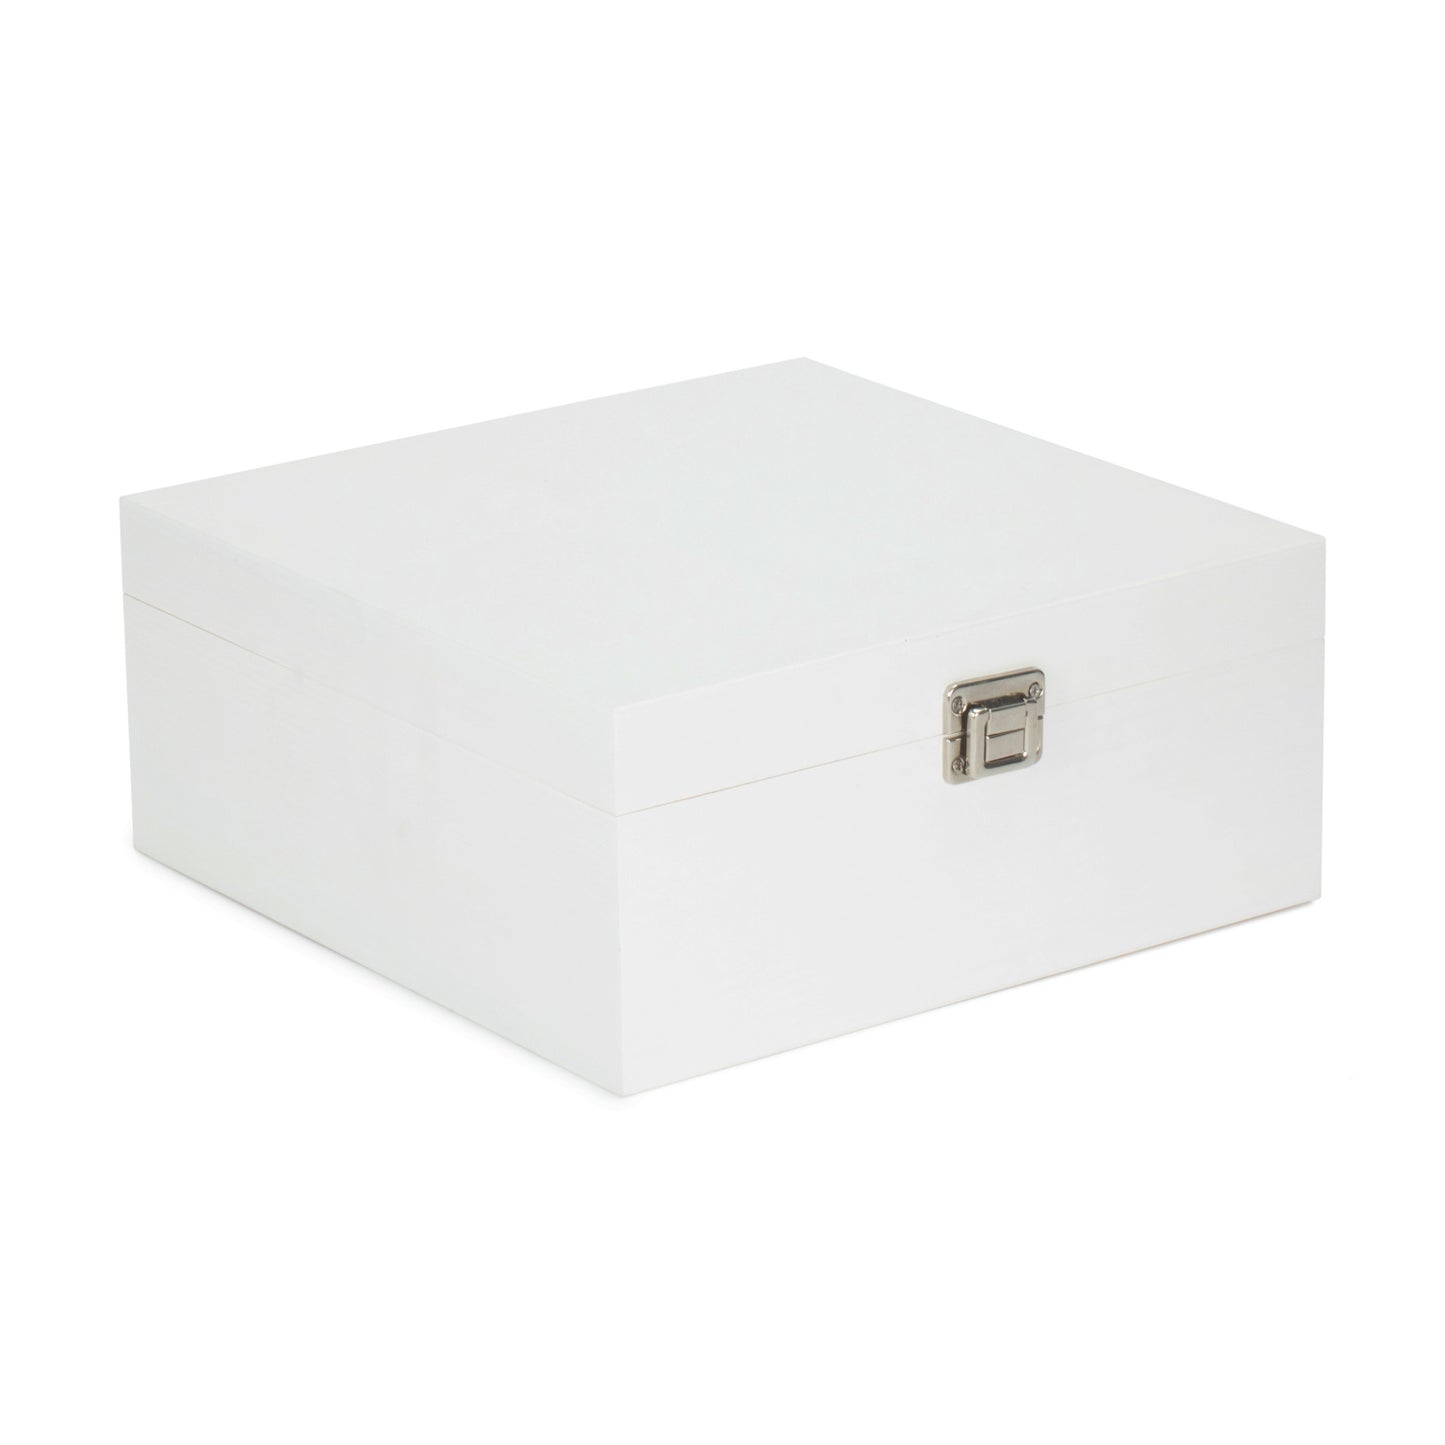 12 Inch Square White Wooden Box